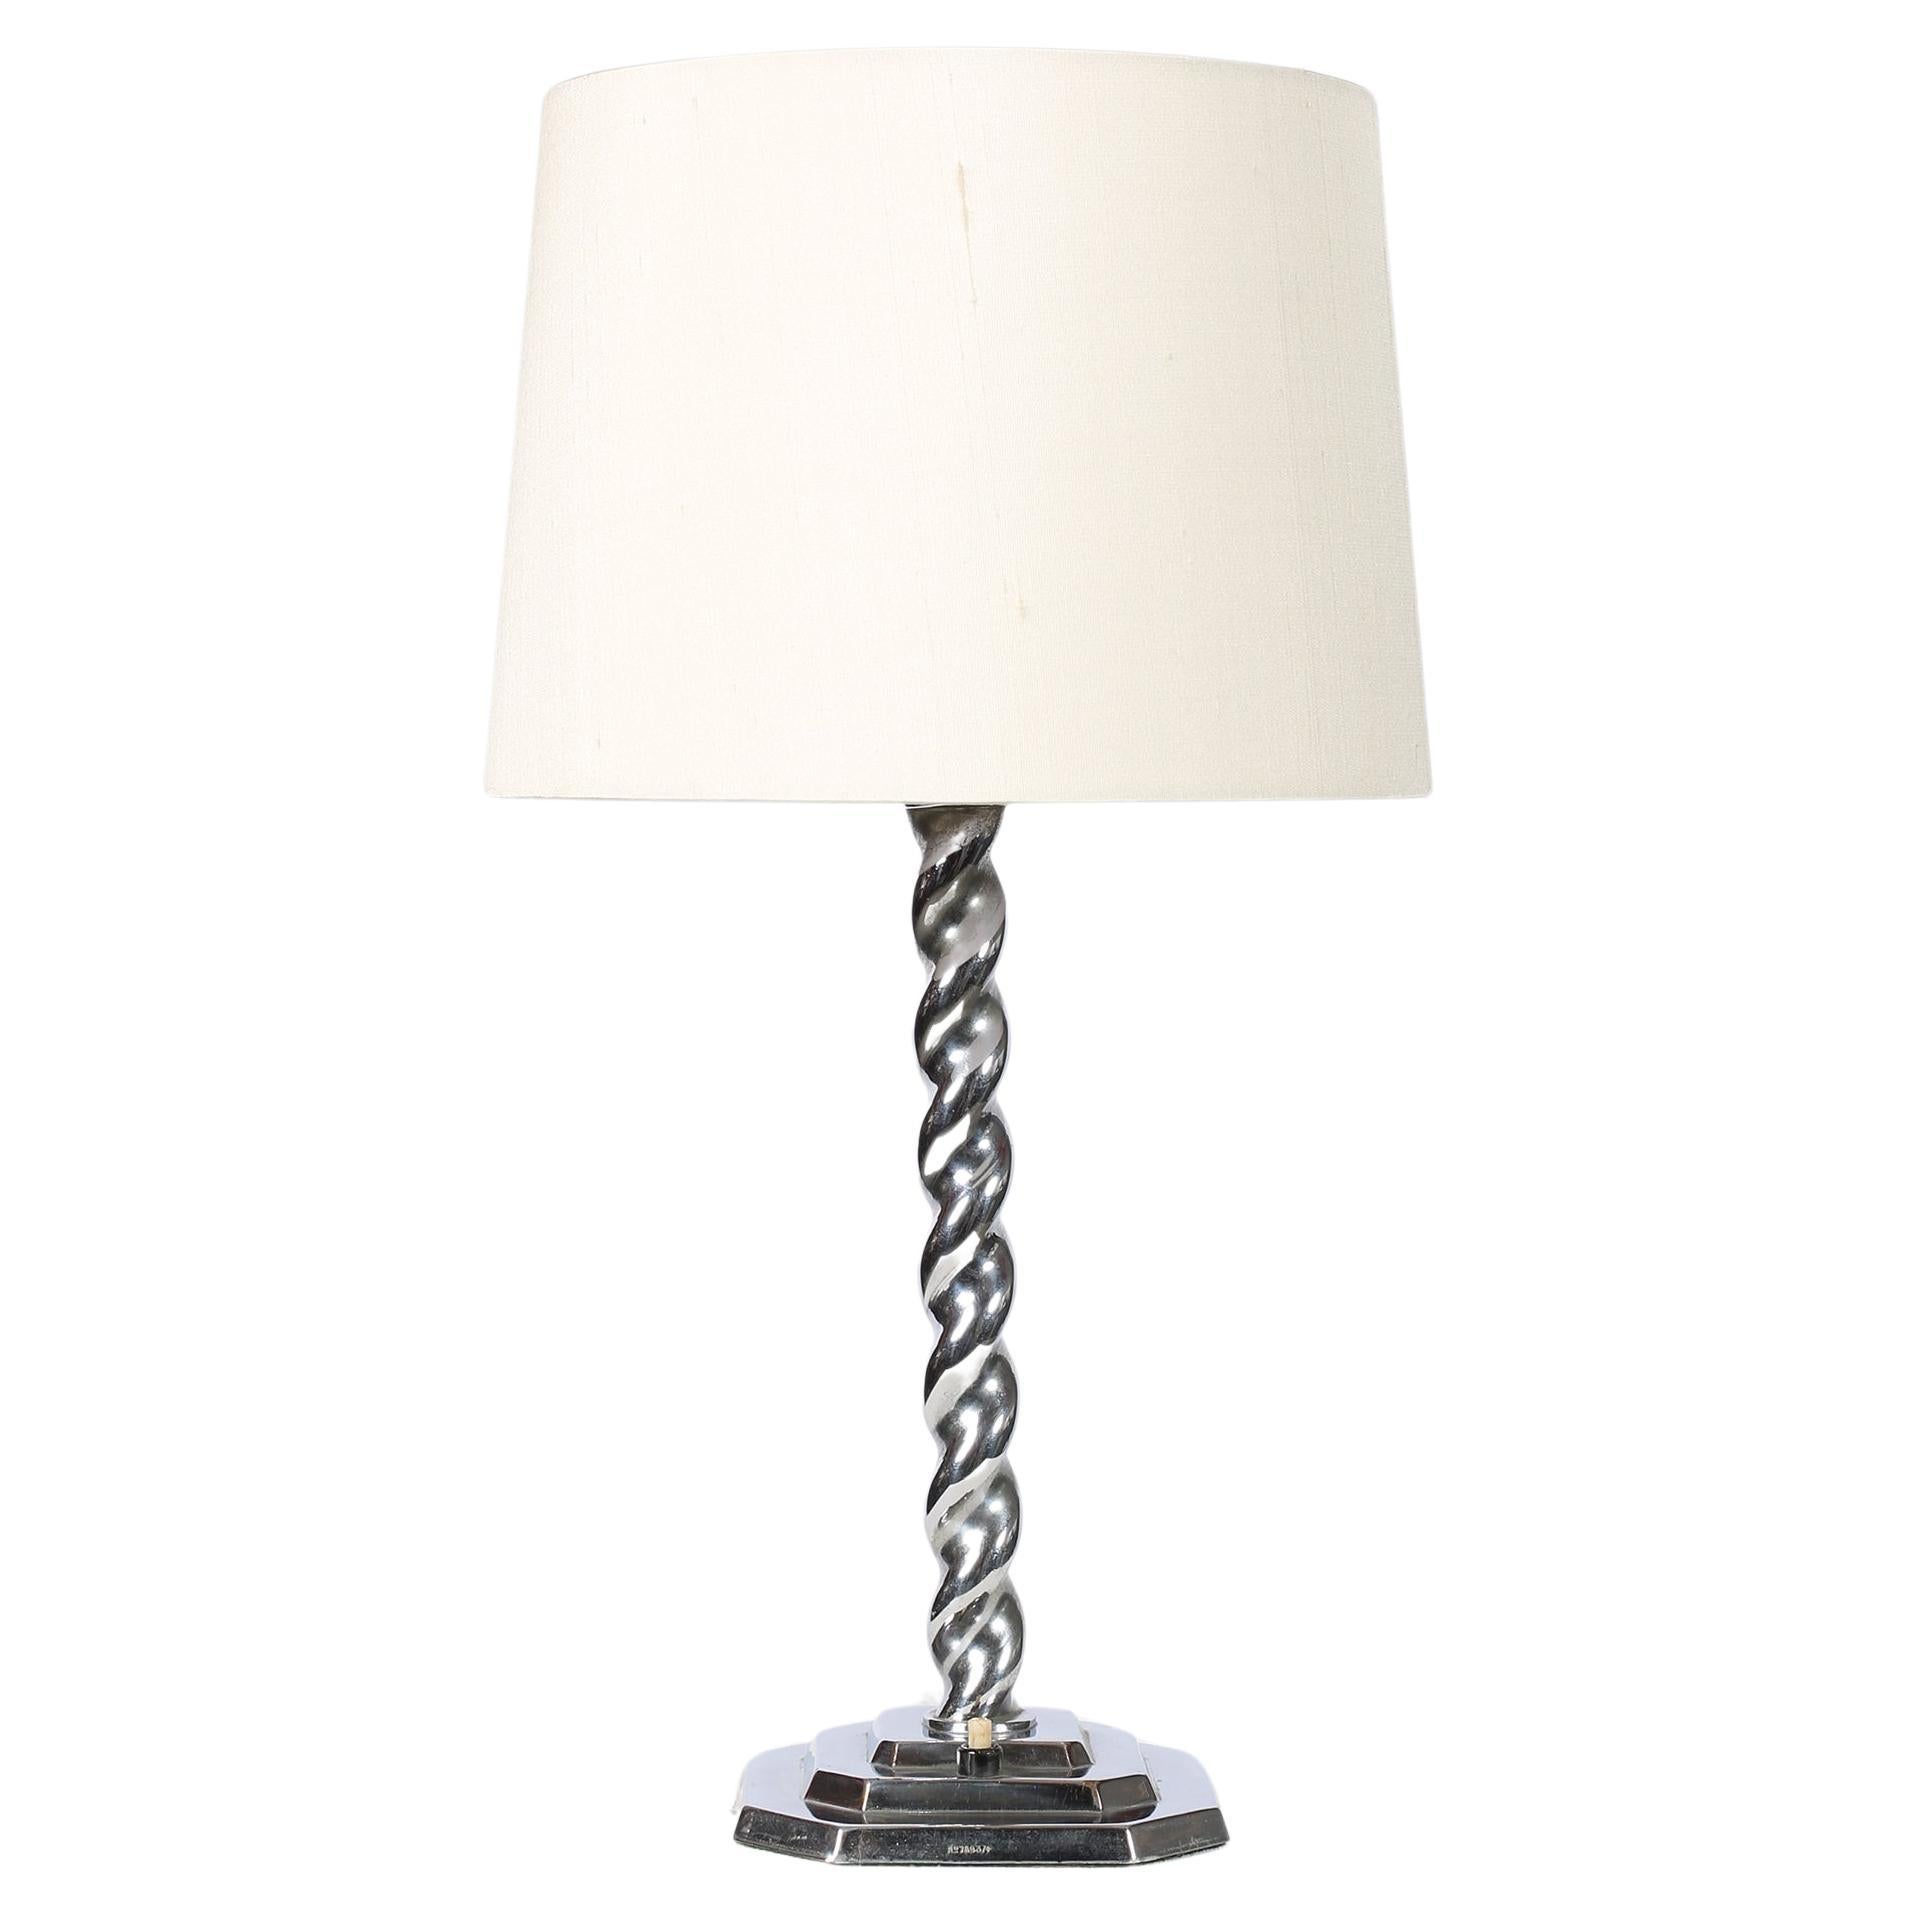 1930s English Art Deco Chromed Brass Torsade Twist Table Lamp For Sale